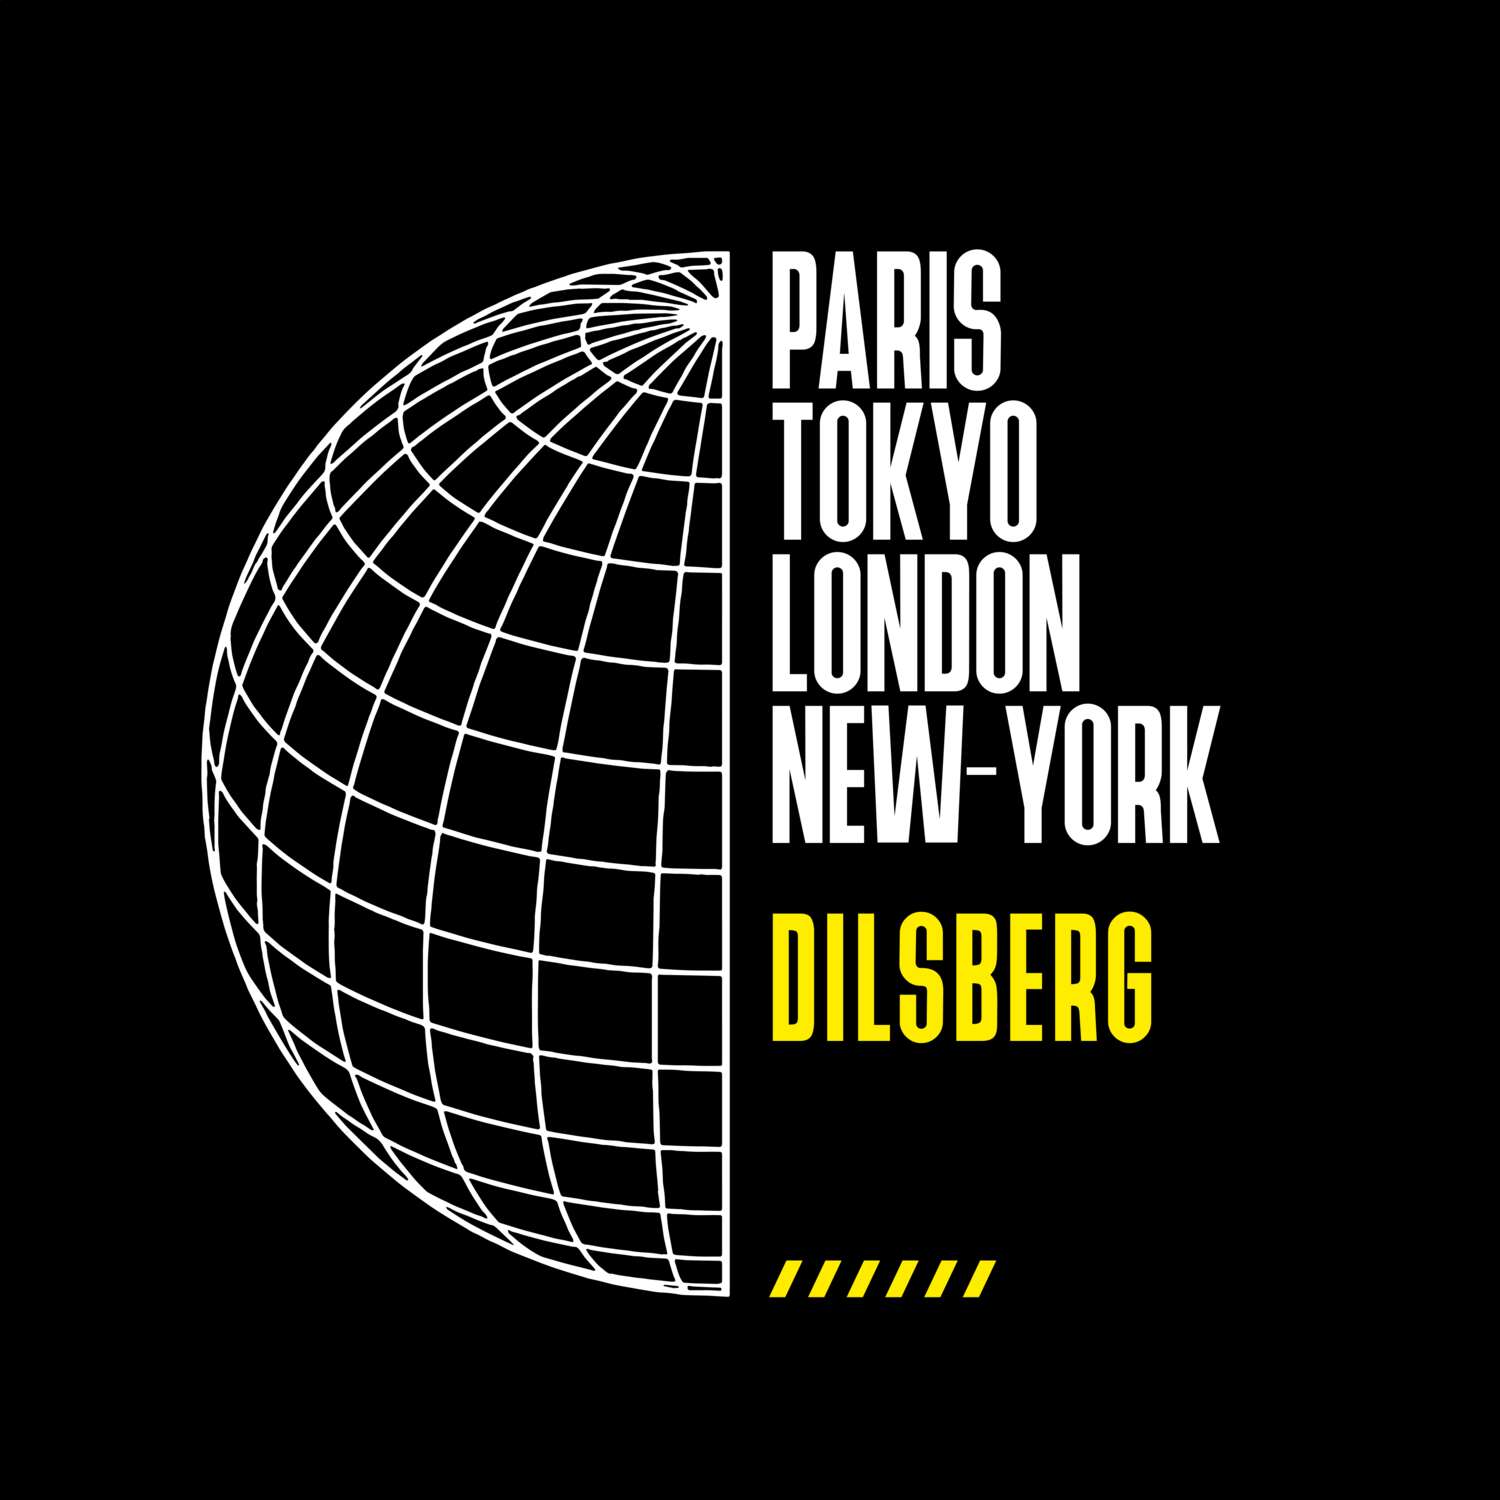 Dilsberg T-Shirt »Paris Tokyo London«